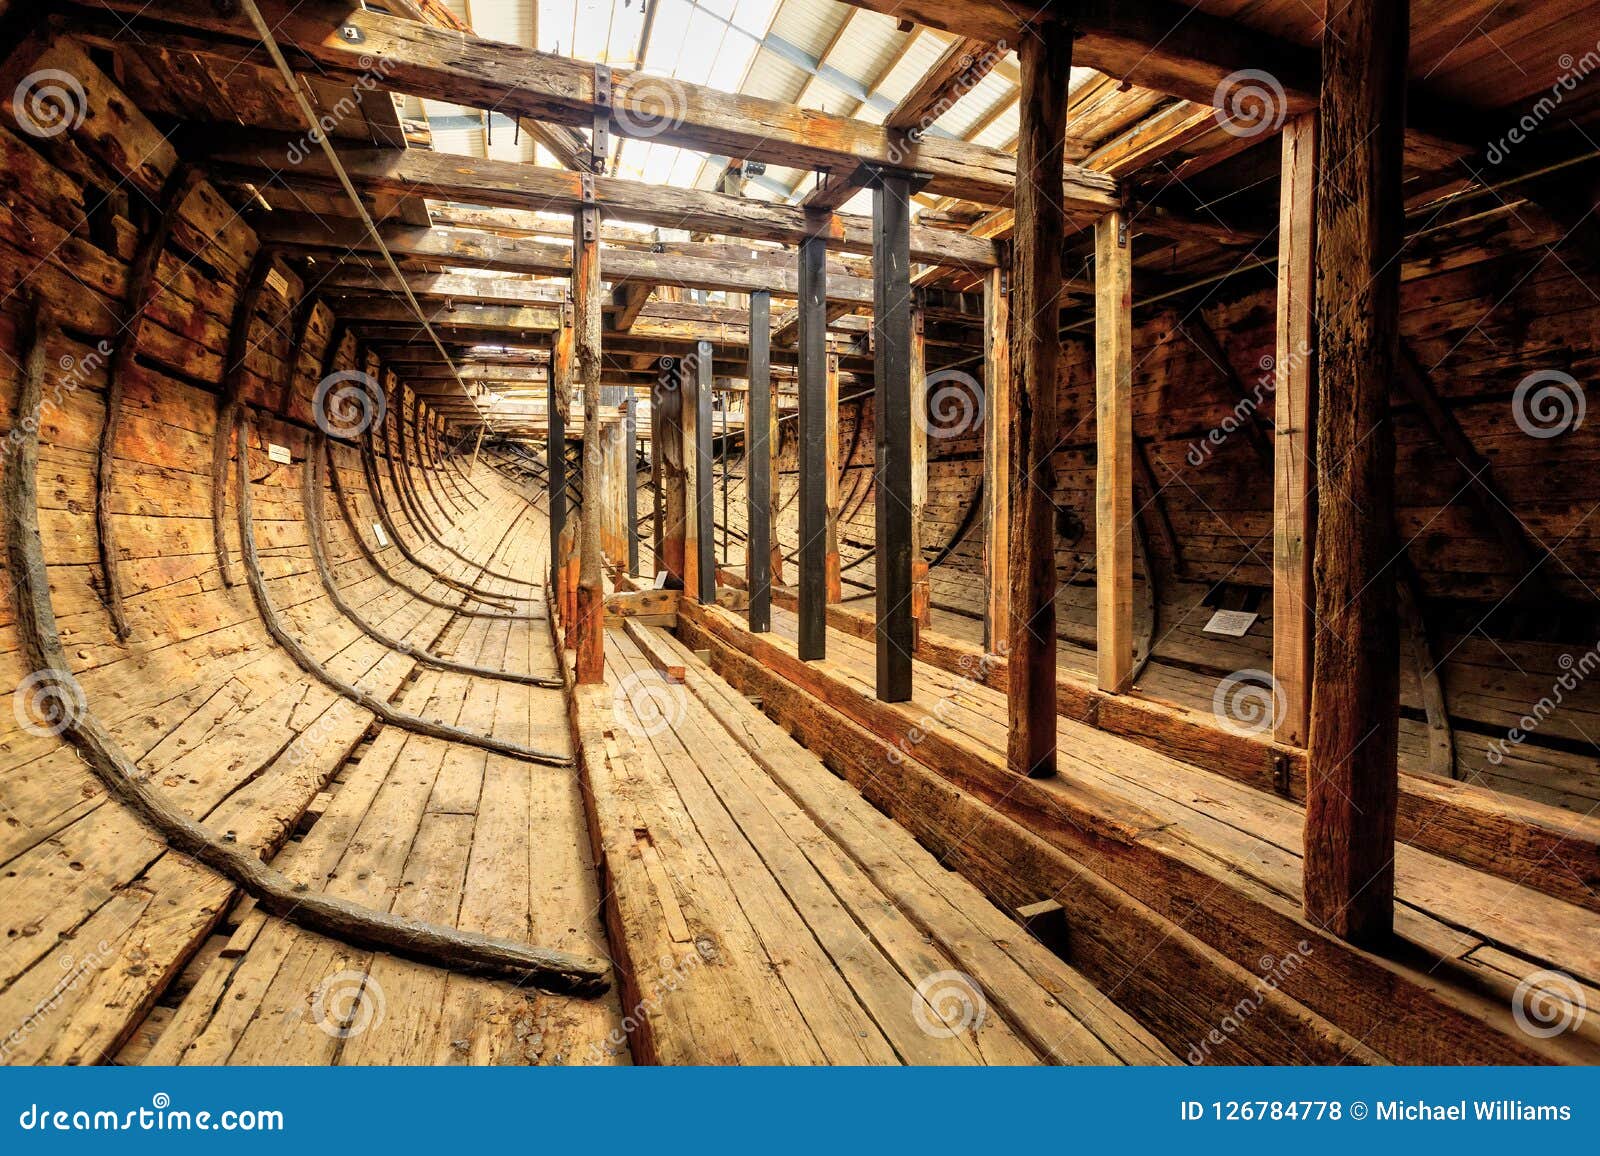 Inside The Edwin Fox The Hulk Of An 1850s Merchant Ship